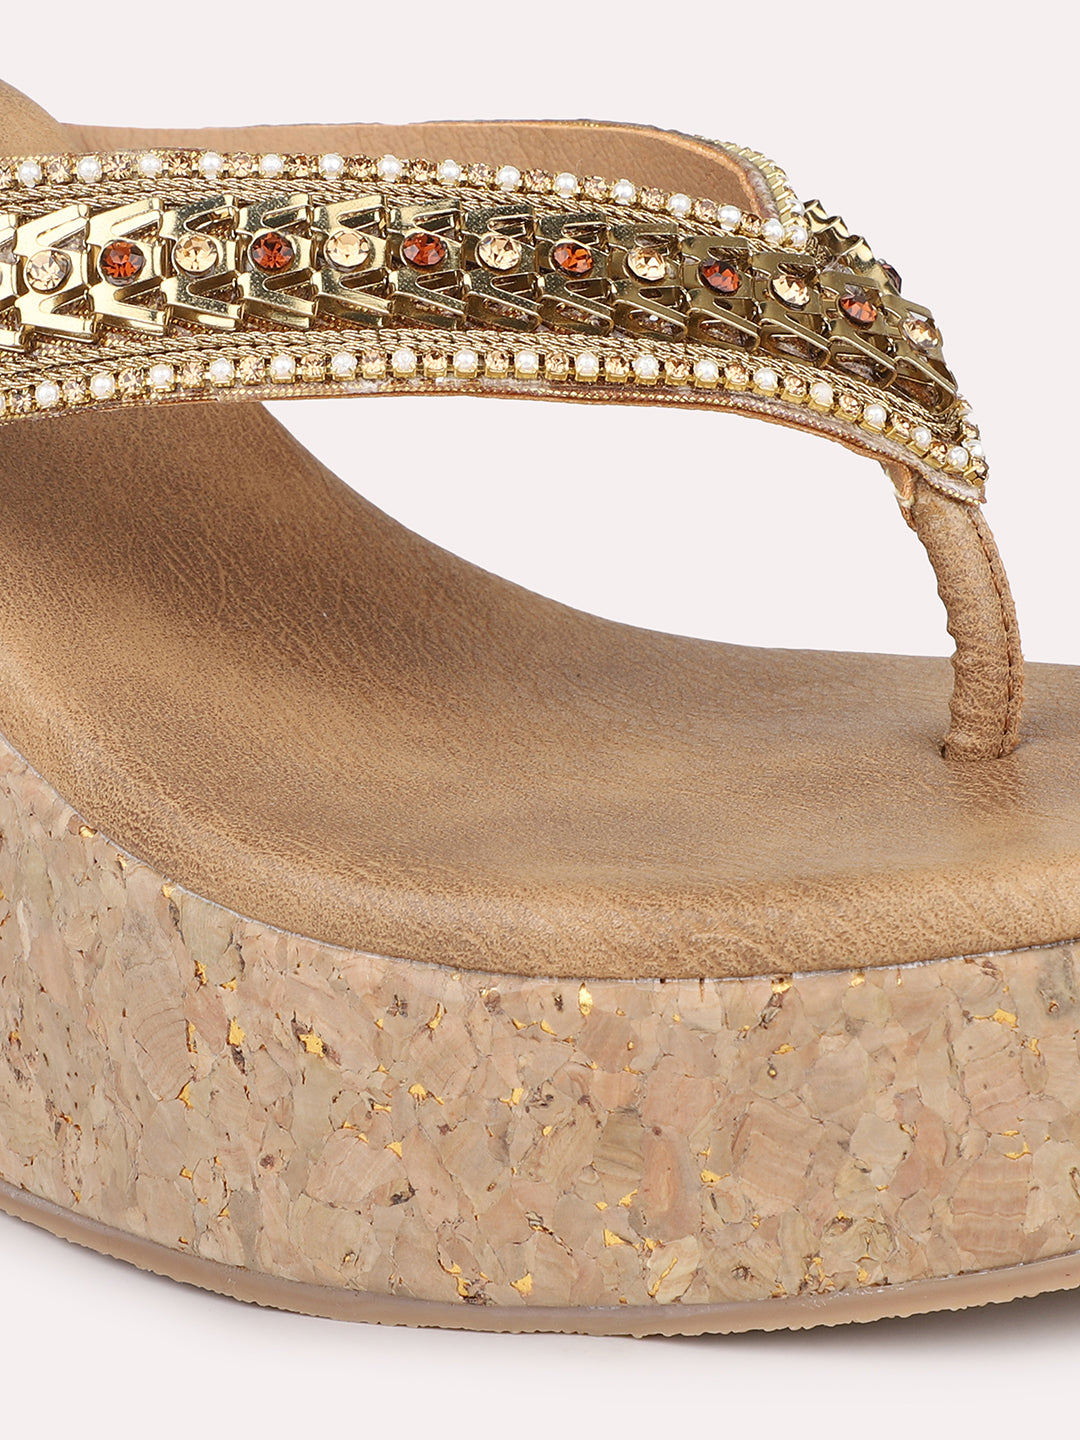 Women Antique Ethnic Embellished Wedges Heels